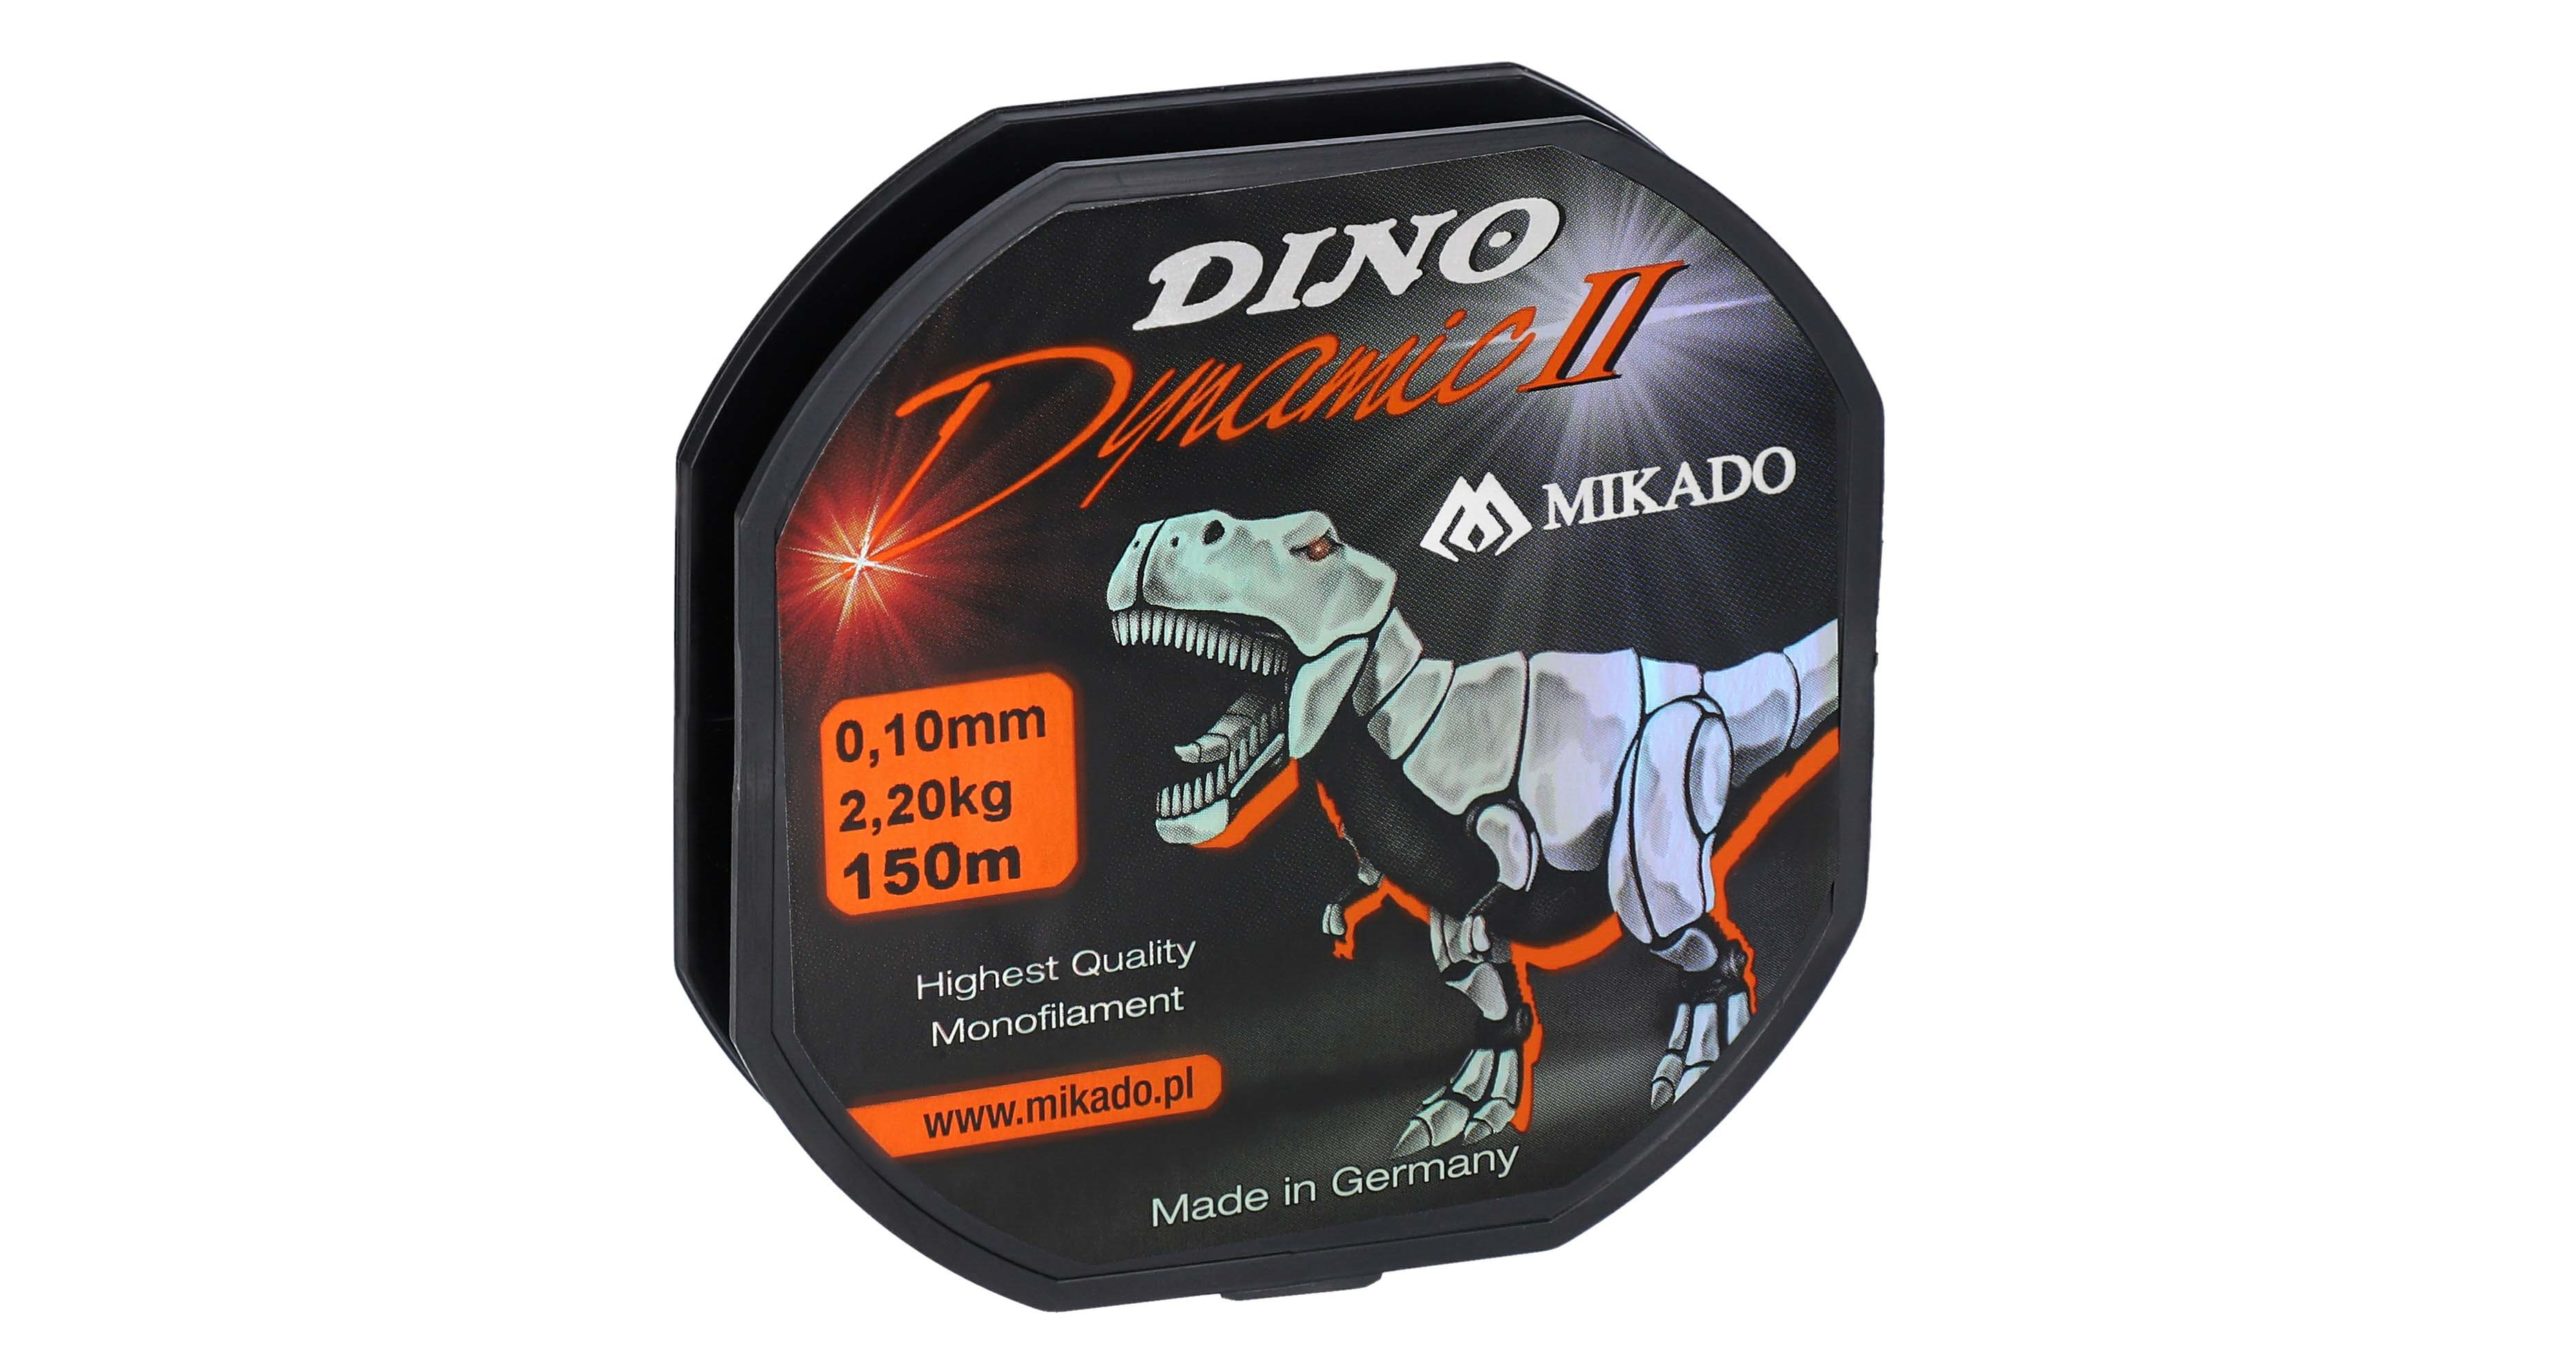 Mikado wędkarstwo - ŻYŁKA - DINO DYNAMIC II - 0.12mm/2.90kg/150m - op.2szp.